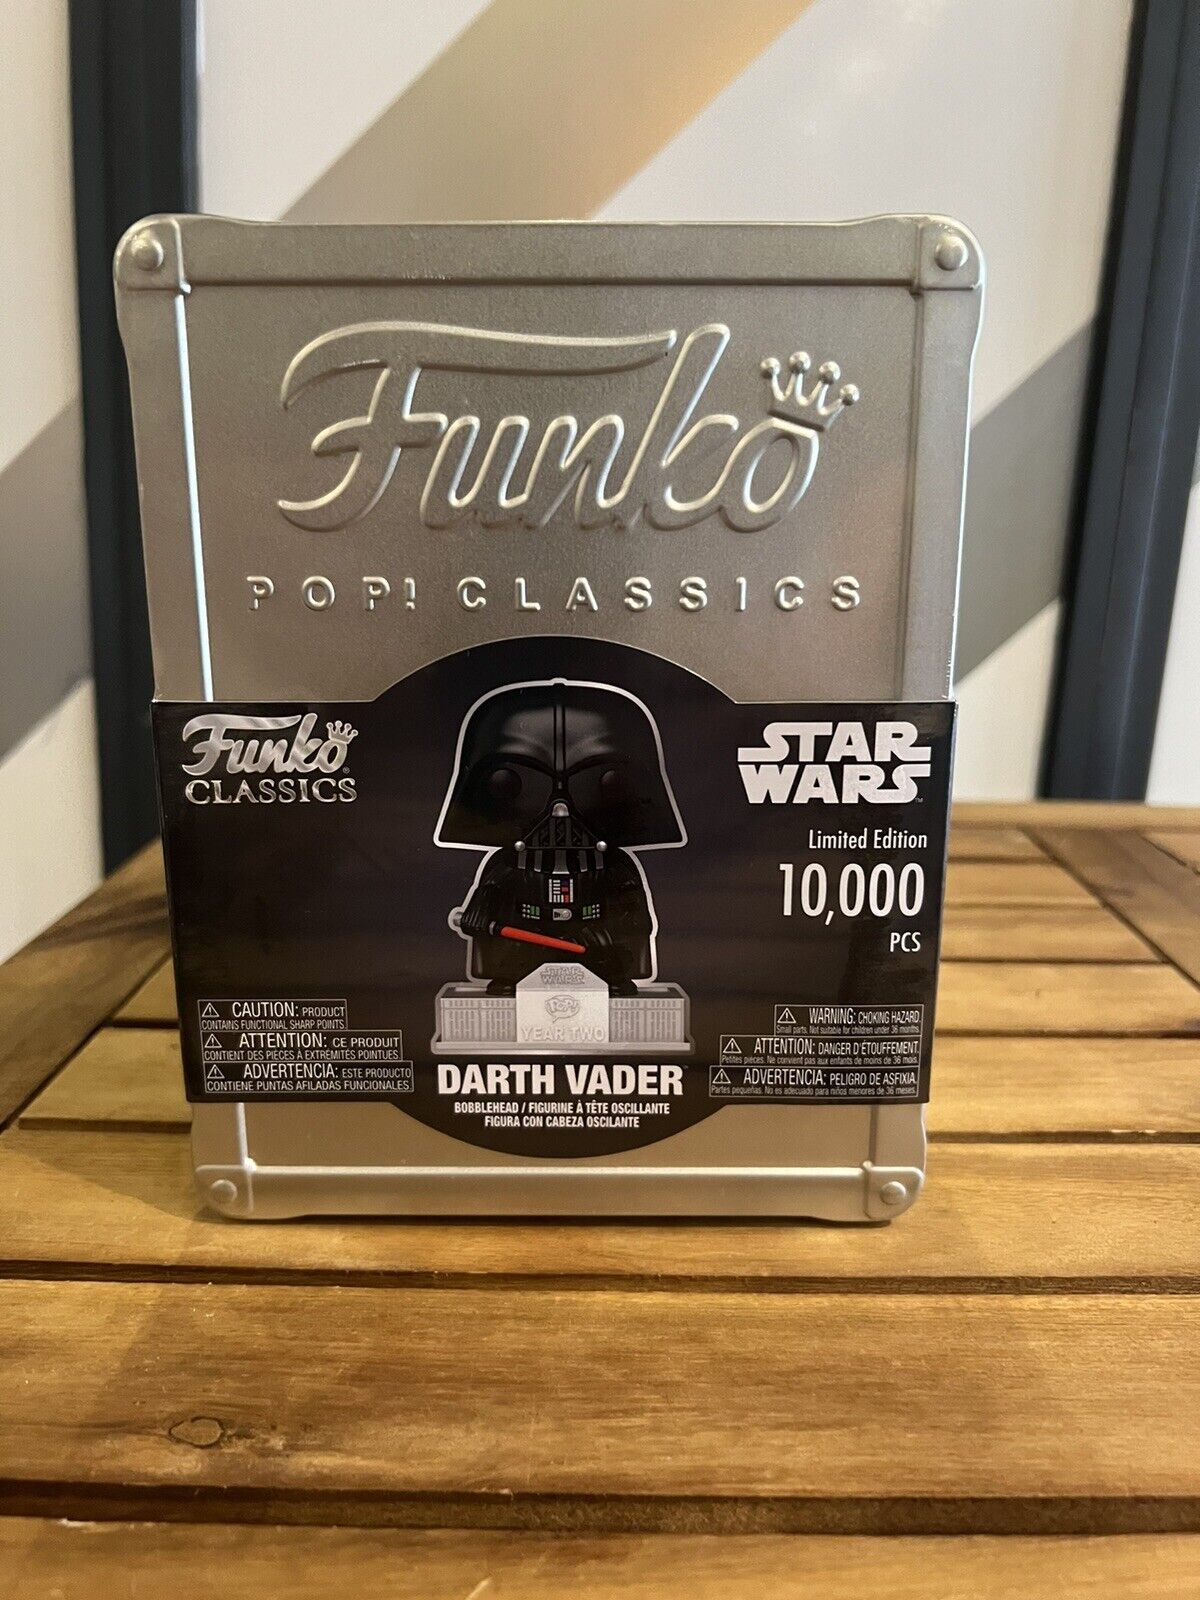 IN HAND LIMITED EDITION 10,000 PIECE EXCLUSIVE Darth Vader Star Wars Funko Pop